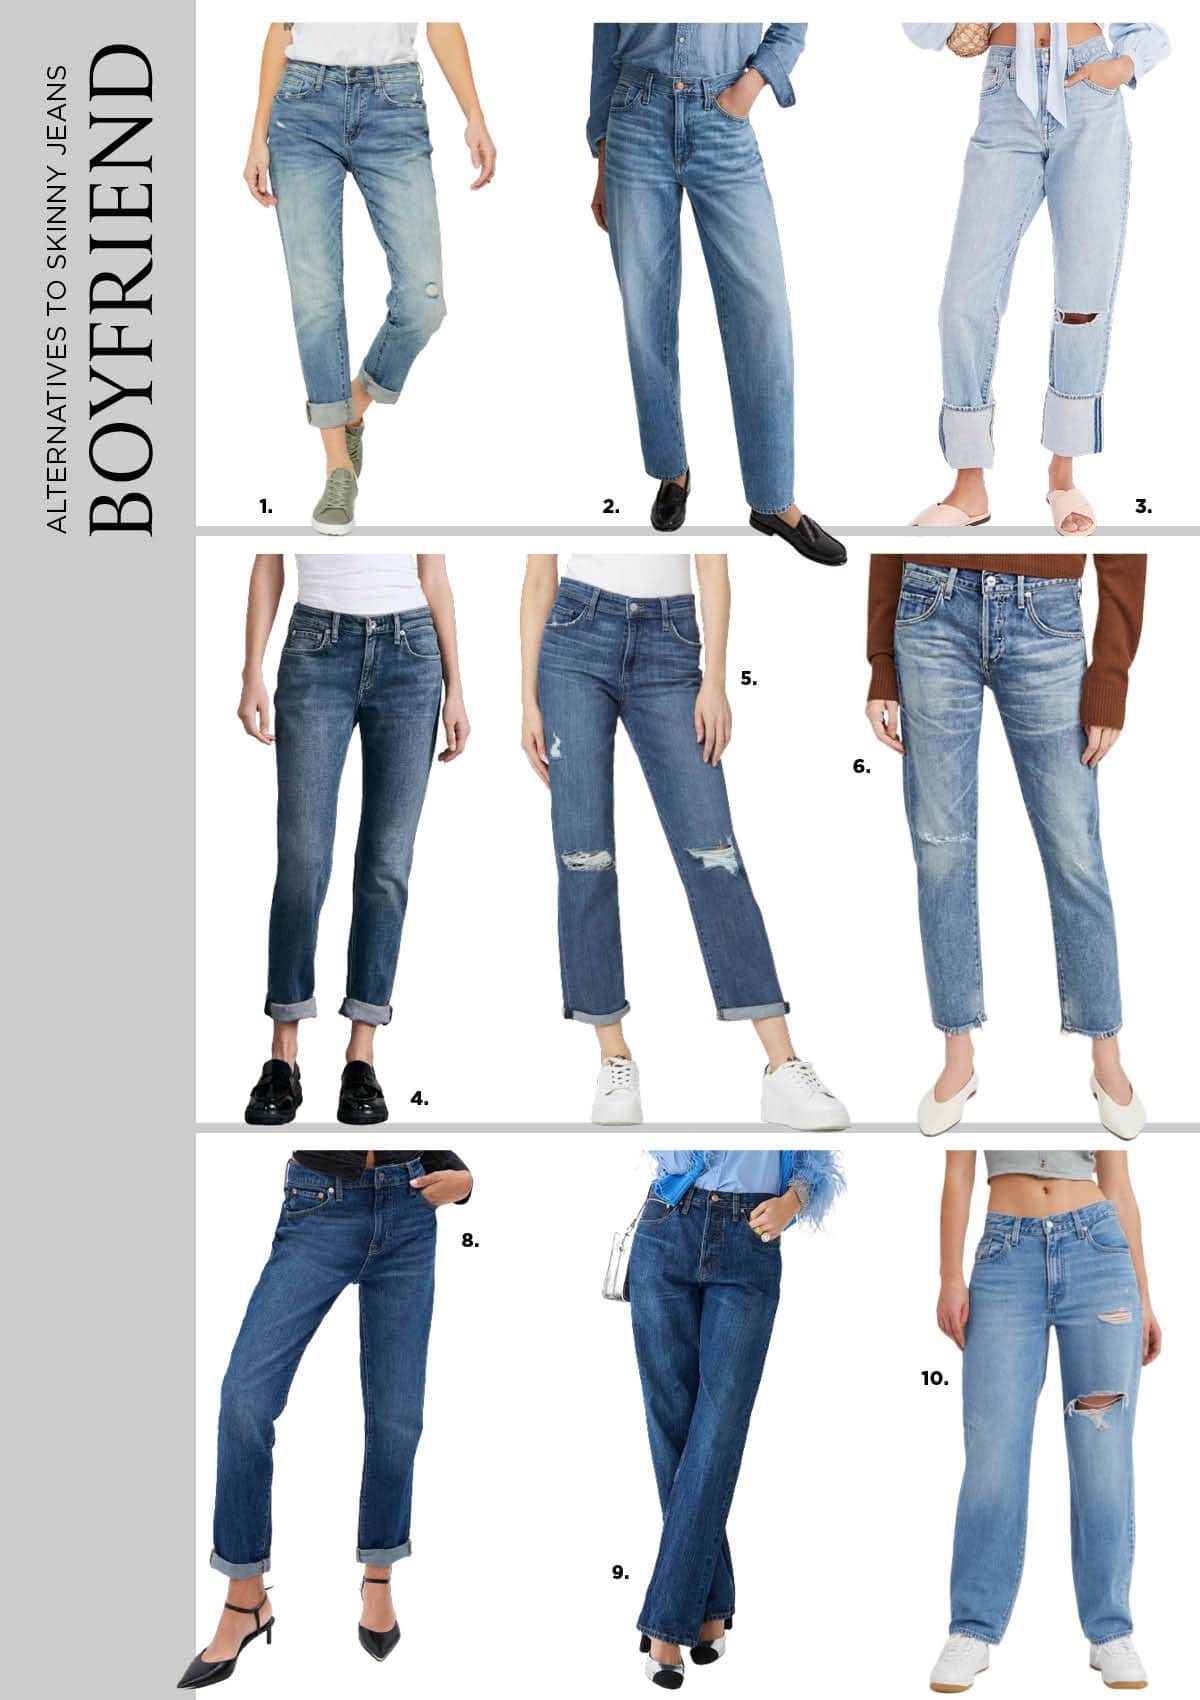 Gen Z deems skinny jeans out of style: What to wear instead